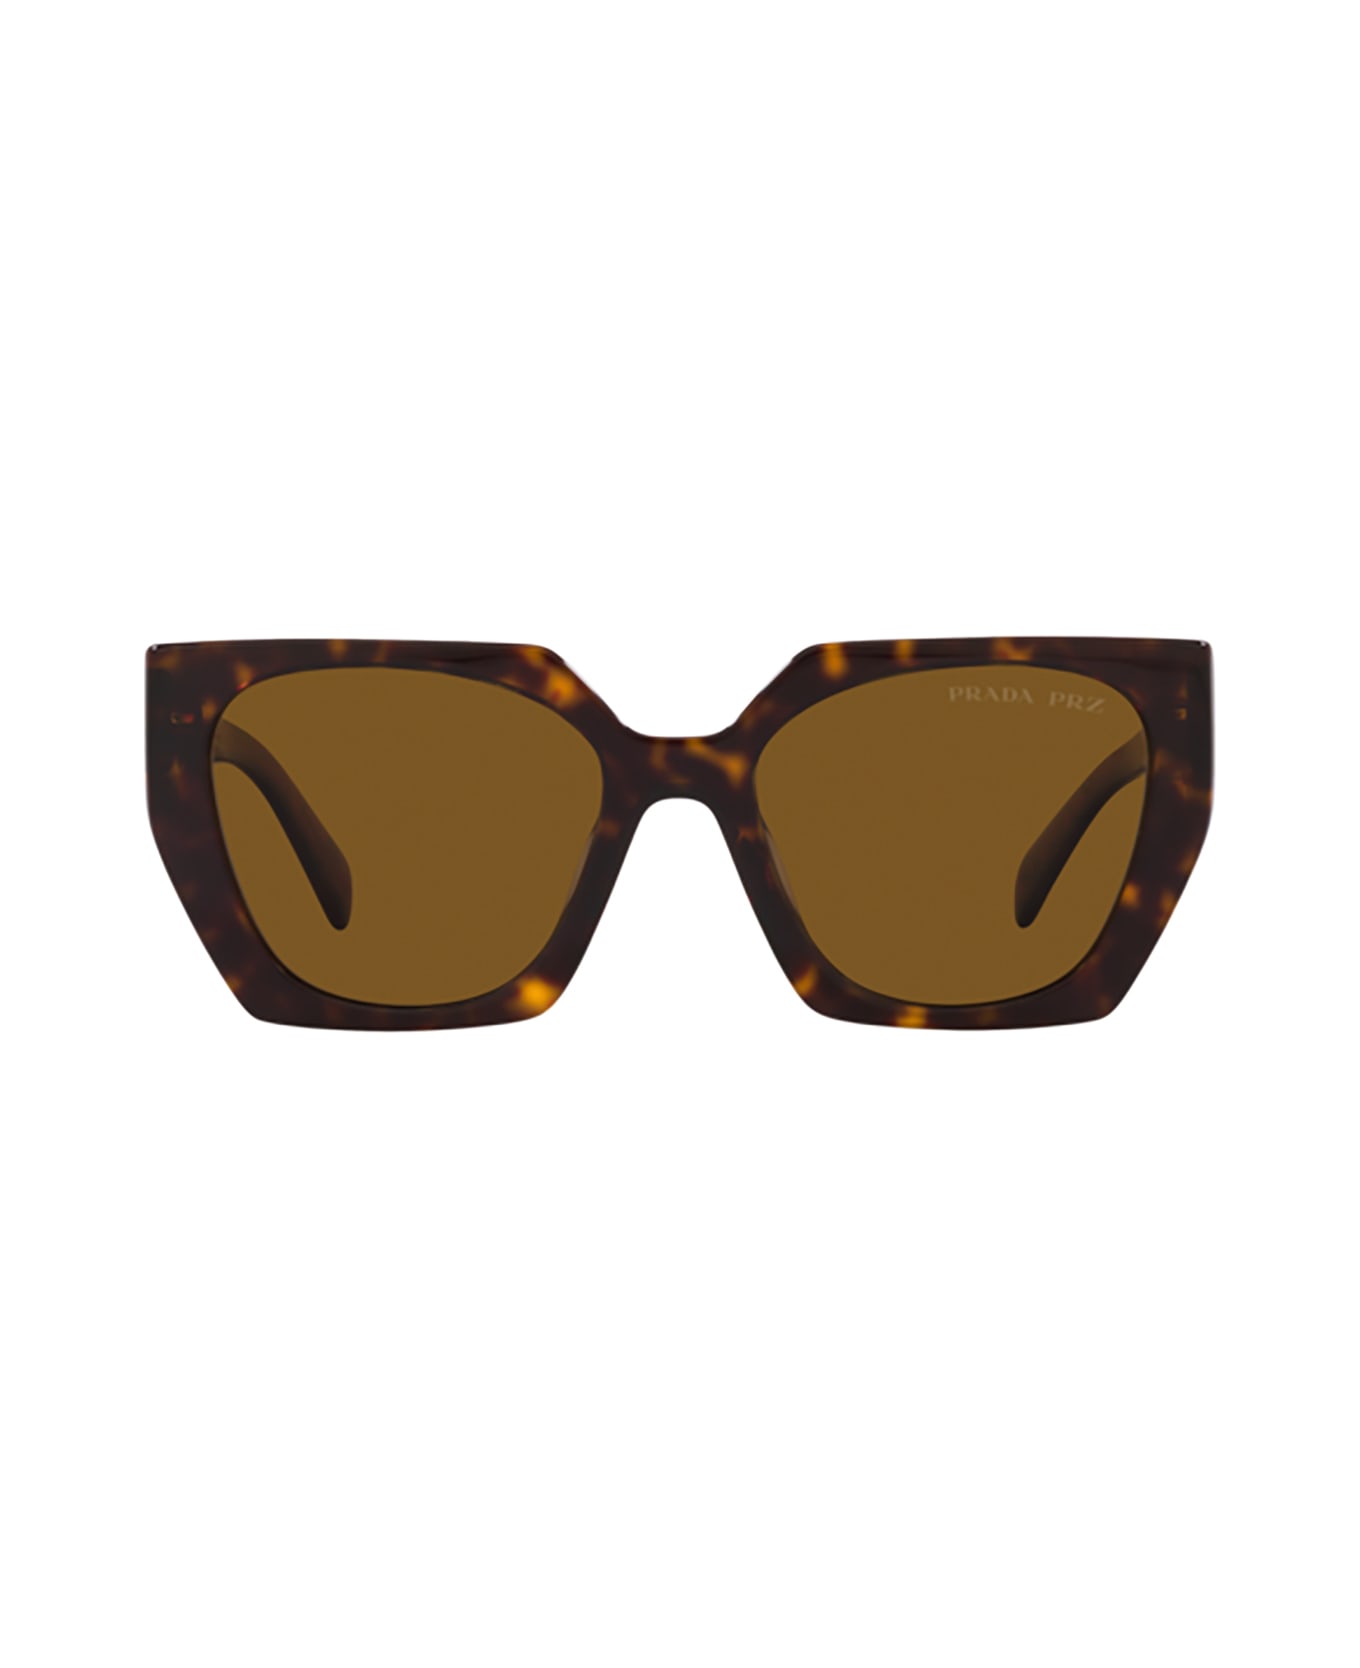 Prada Eyewear Pr 15ws Tortoise Sunglasses - Tortoise